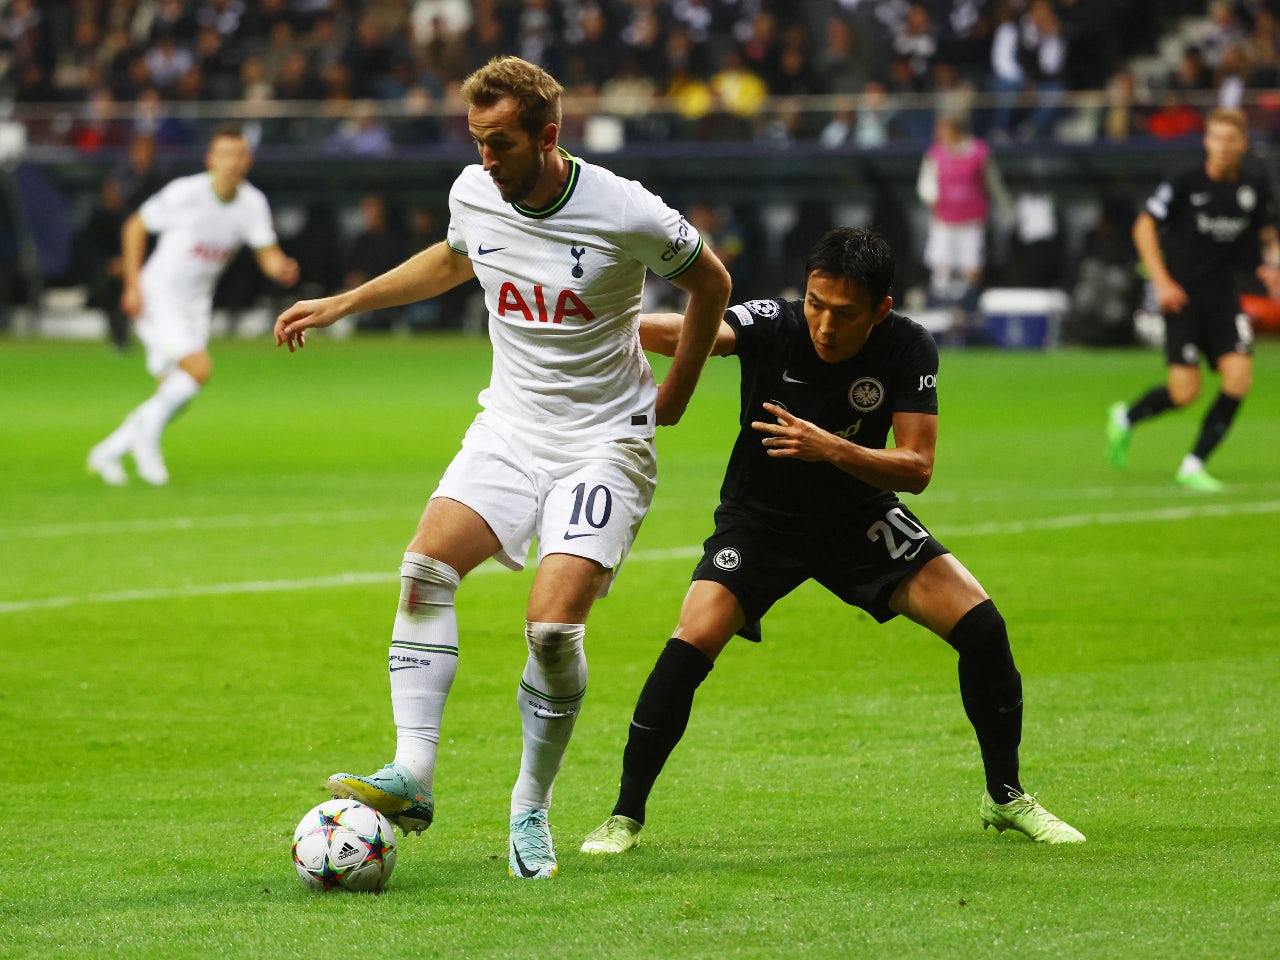 Wasteful Tottenham Hotspur held to goalless draw by Eintracht Frankfurt